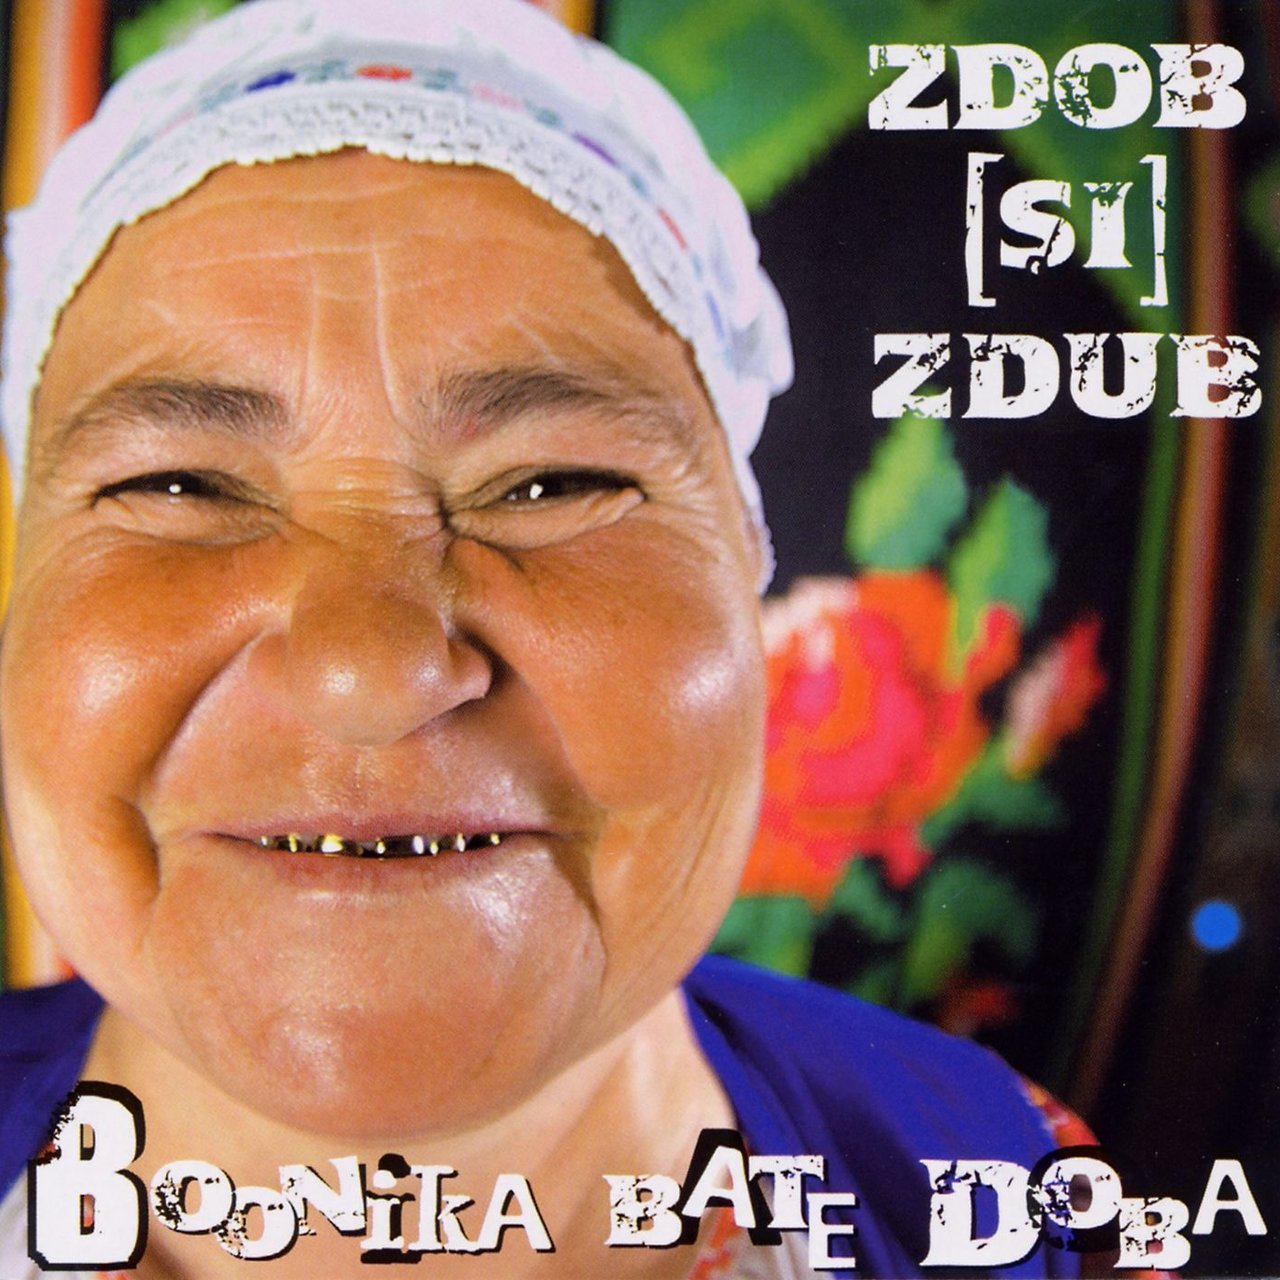 Zdob și Zdub Boonika Bate Doba cover artwork